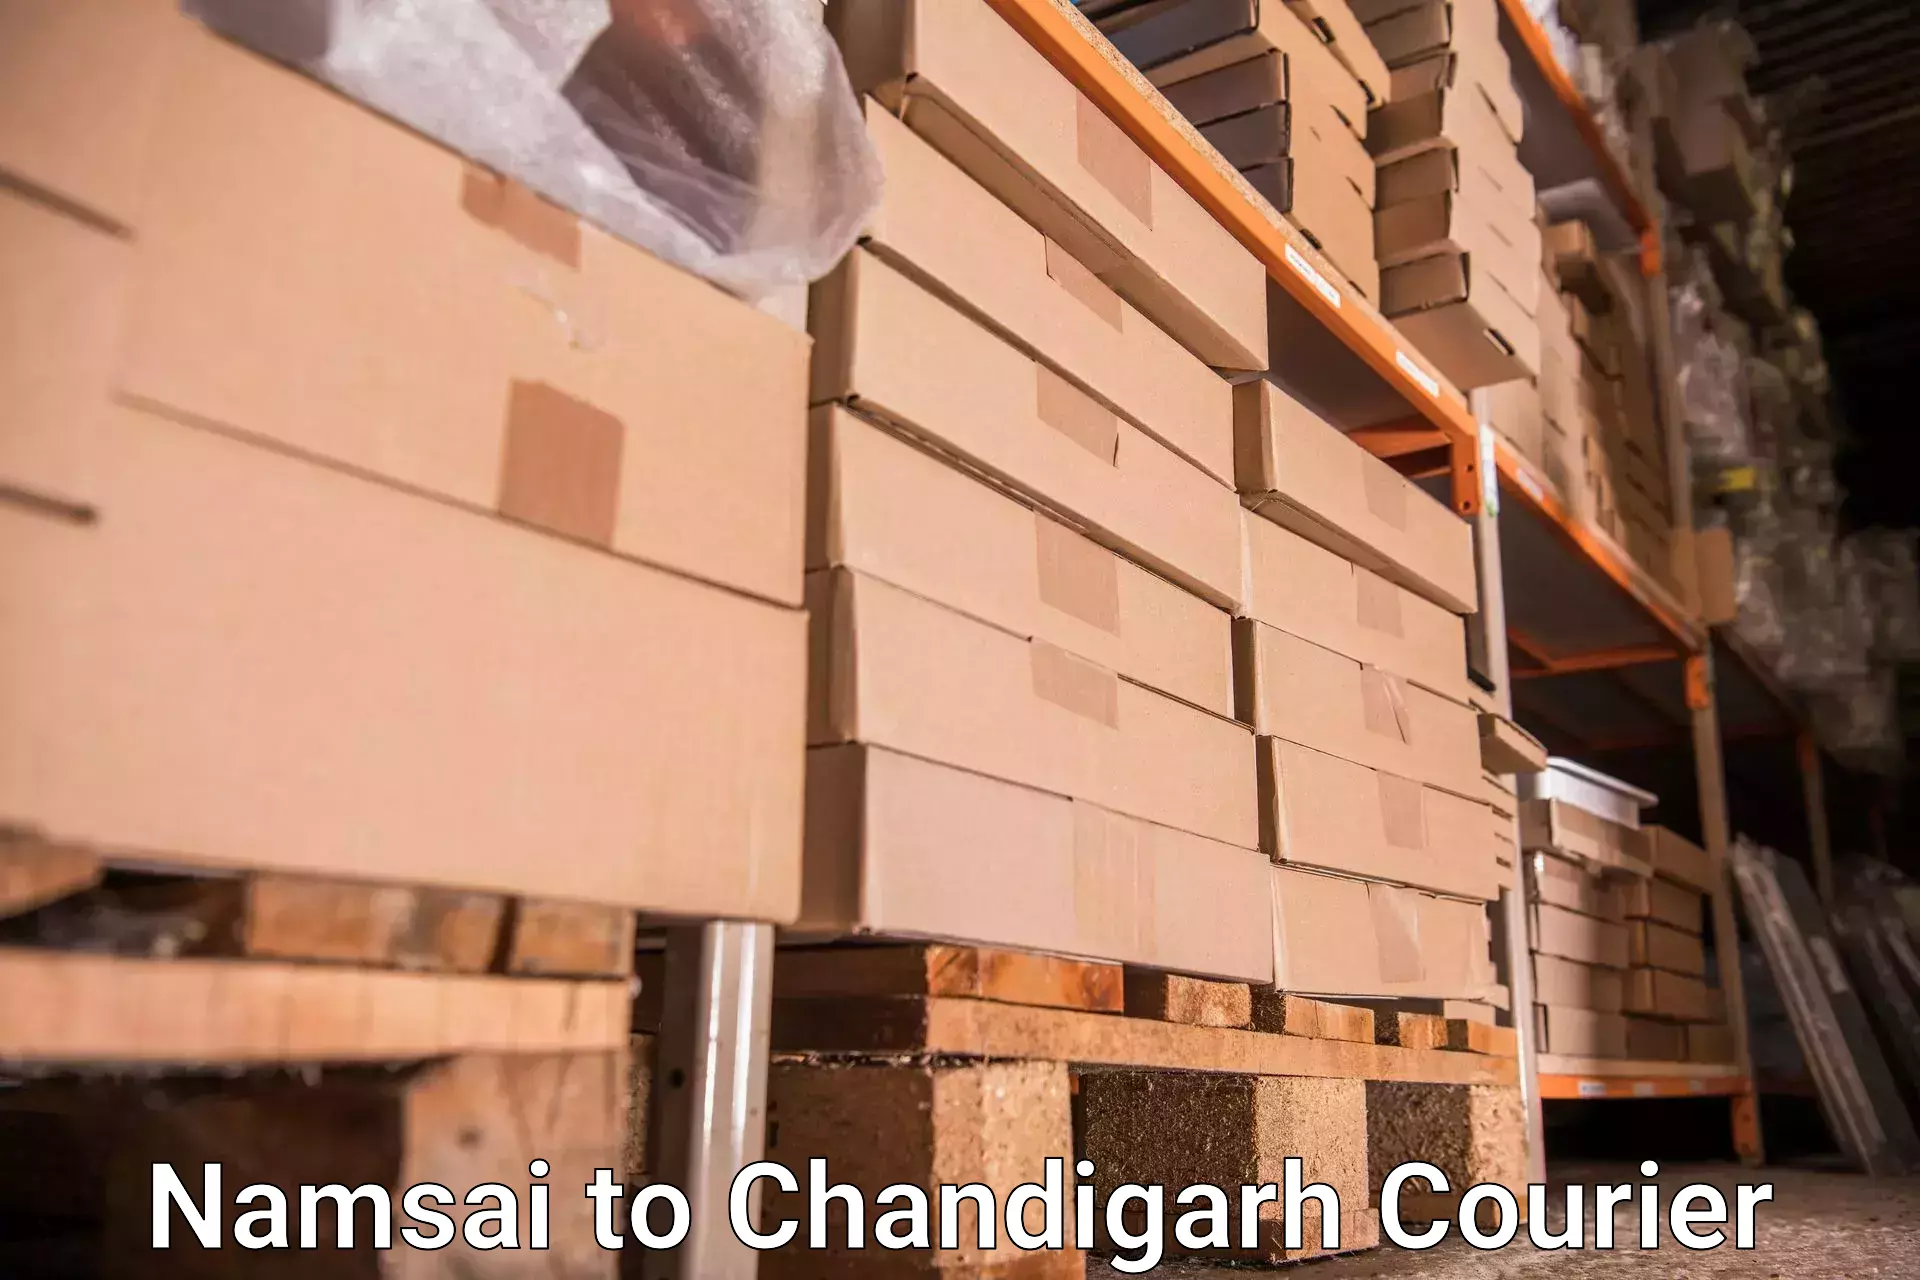 Baggage relocation service Namsai to Chandigarh